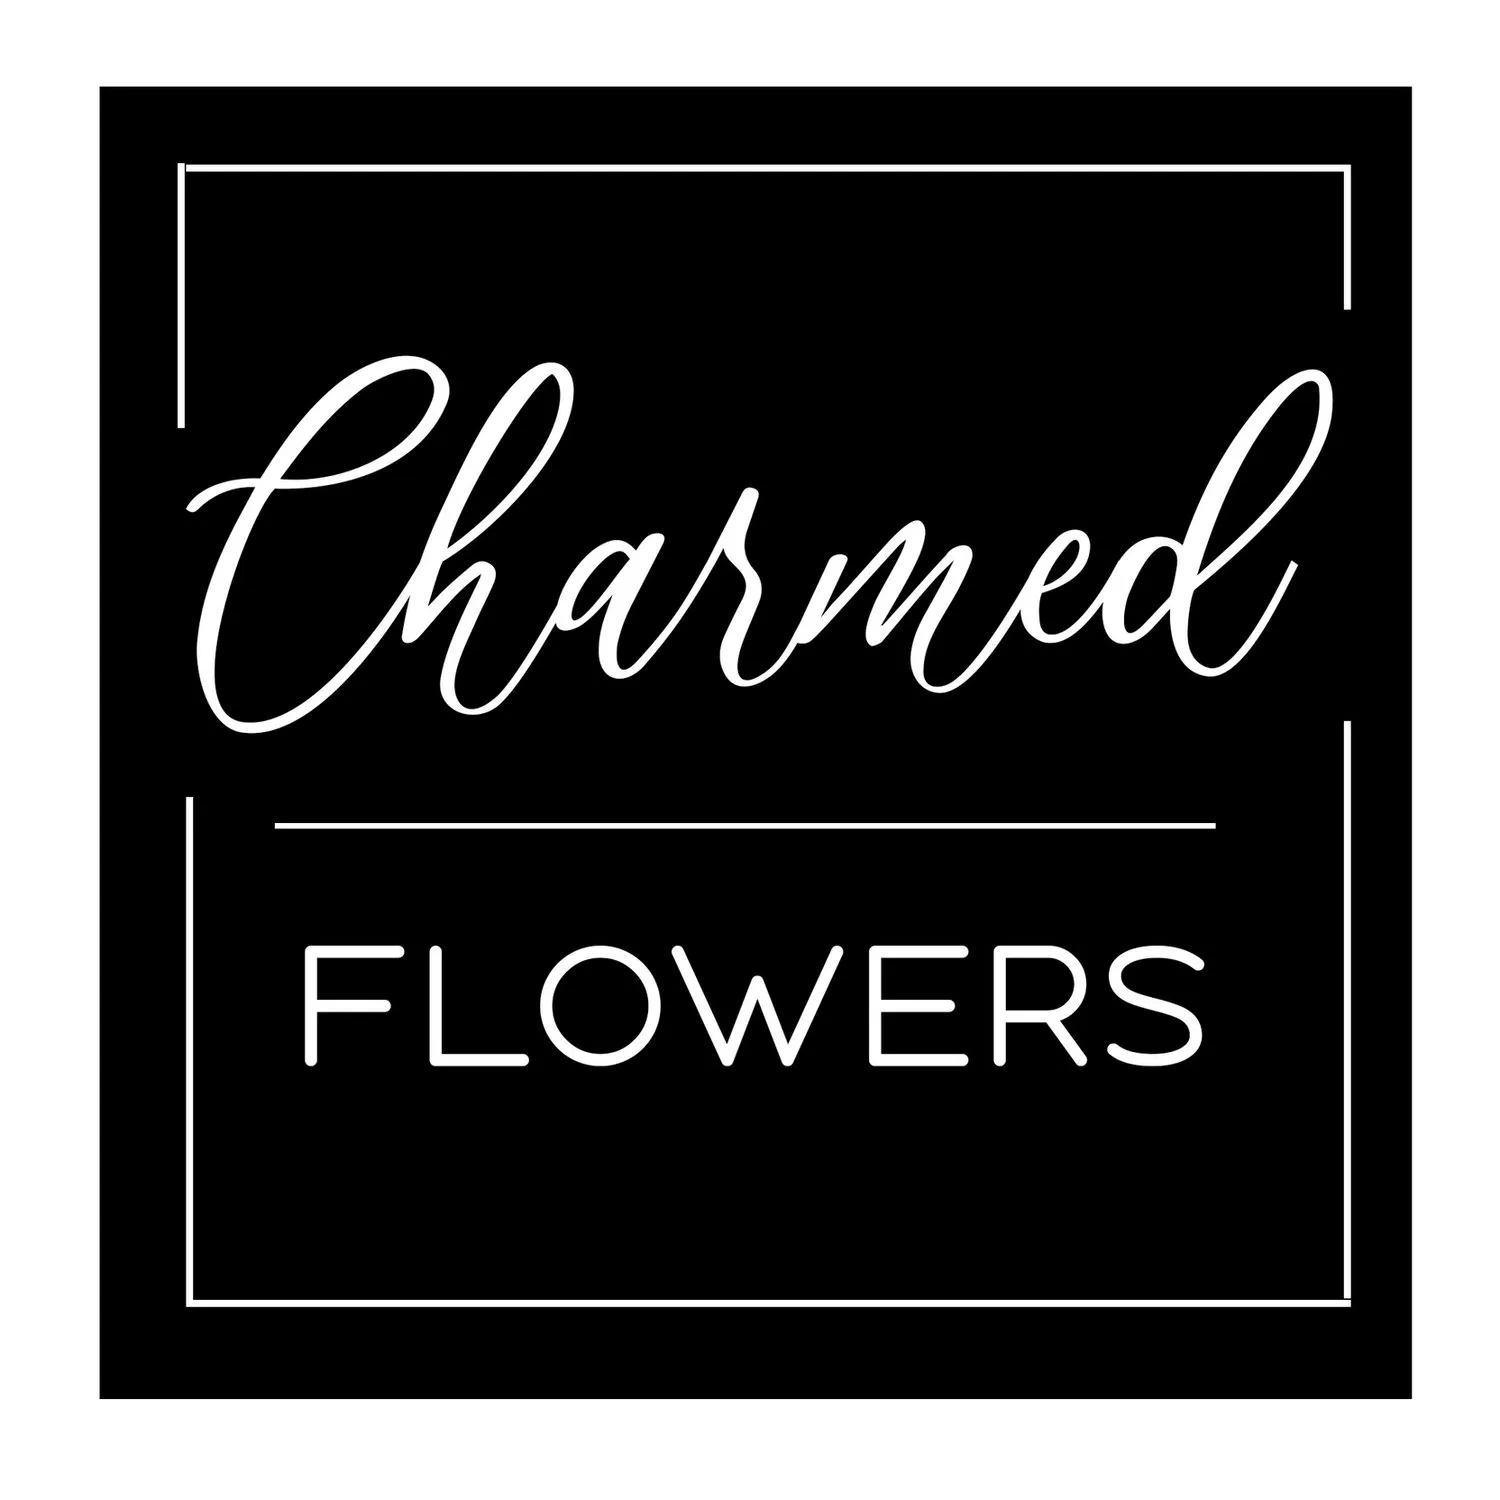 Charmed Flowers